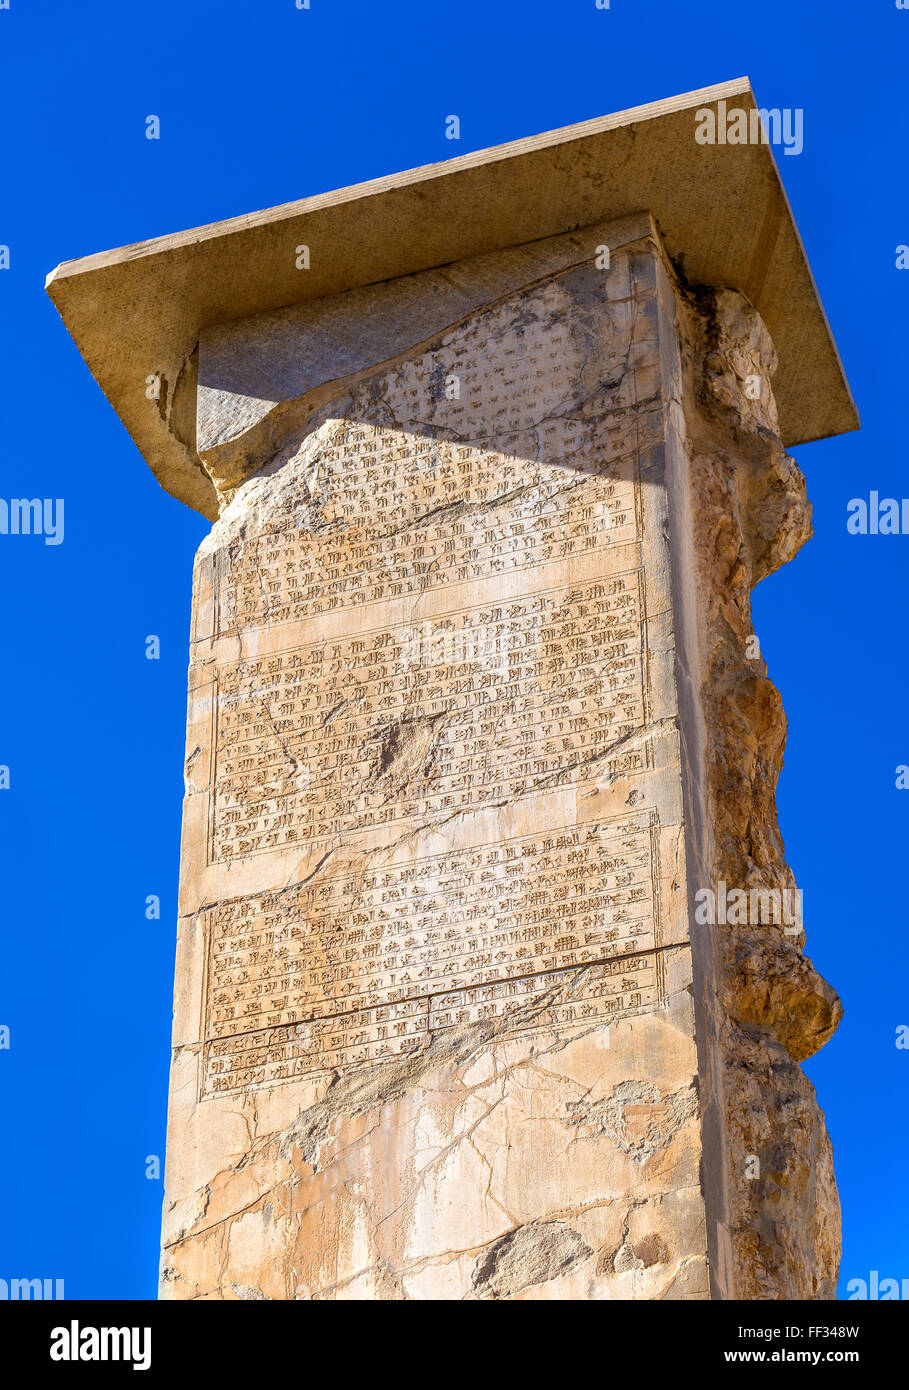 Ancient script on a column in Persepolis, Iran Stock Photo